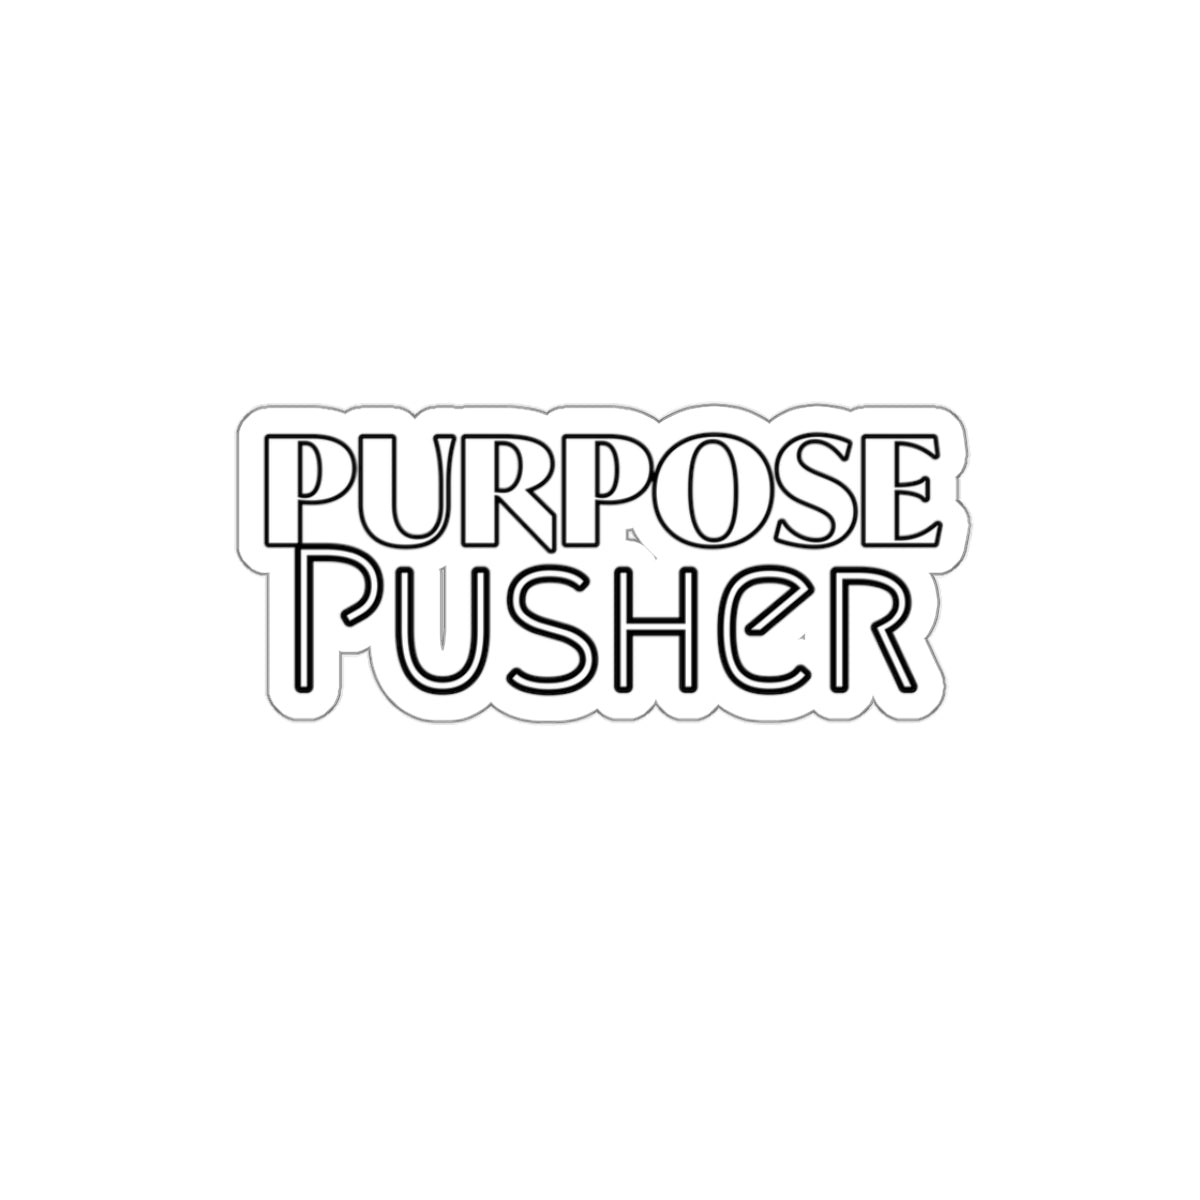 PURPOSE PUSHER Decal/Sticker - The Bible Junkies®